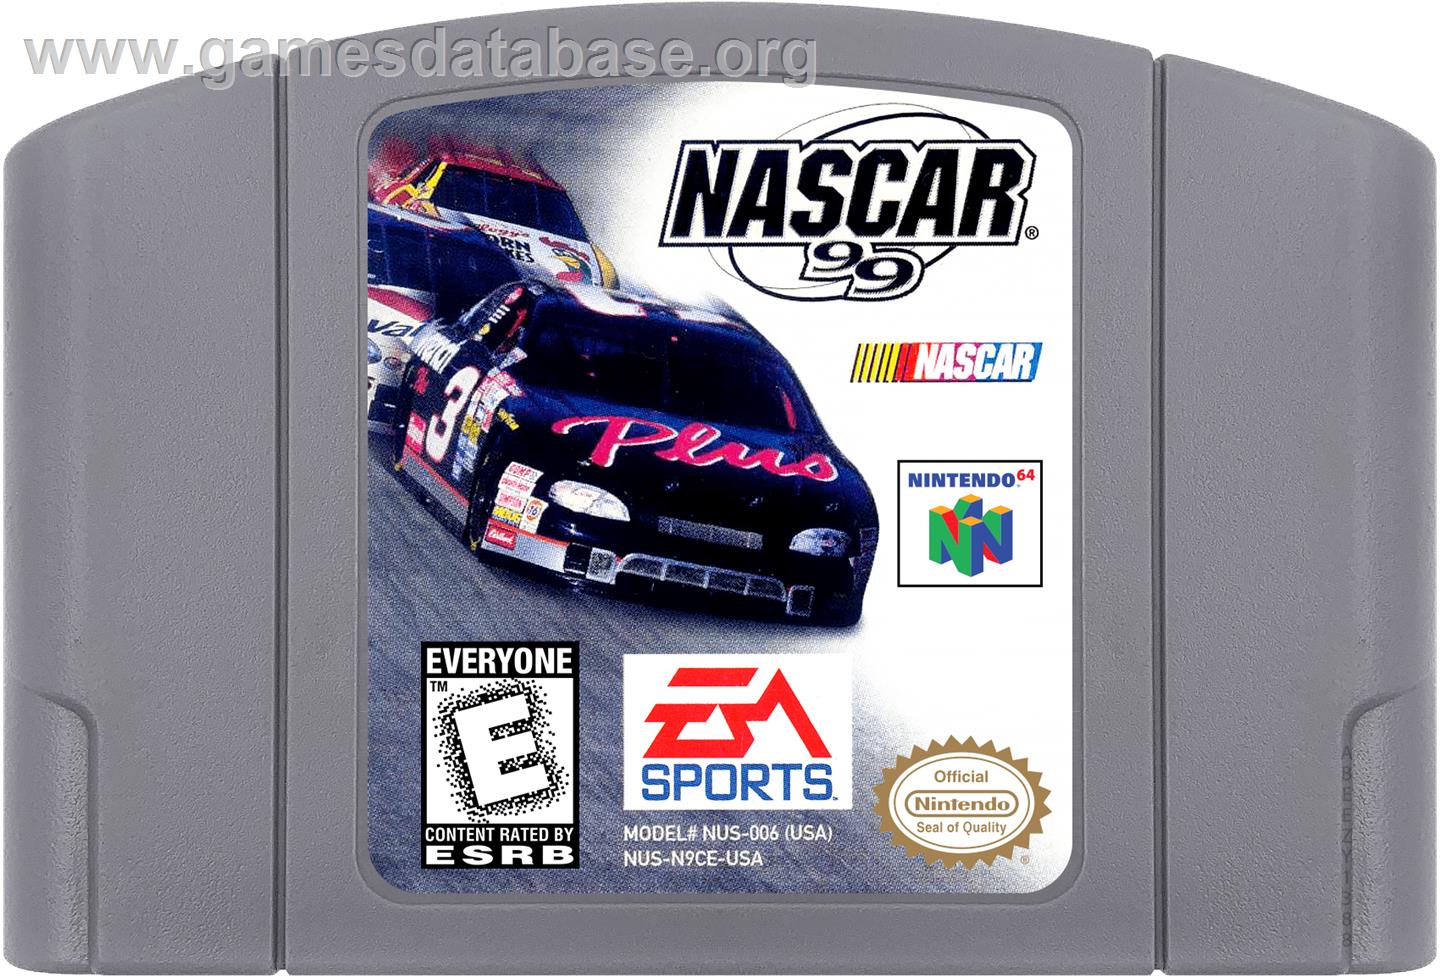 NASCAR 99 - Nintendo N64 - Artwork - Cartridge